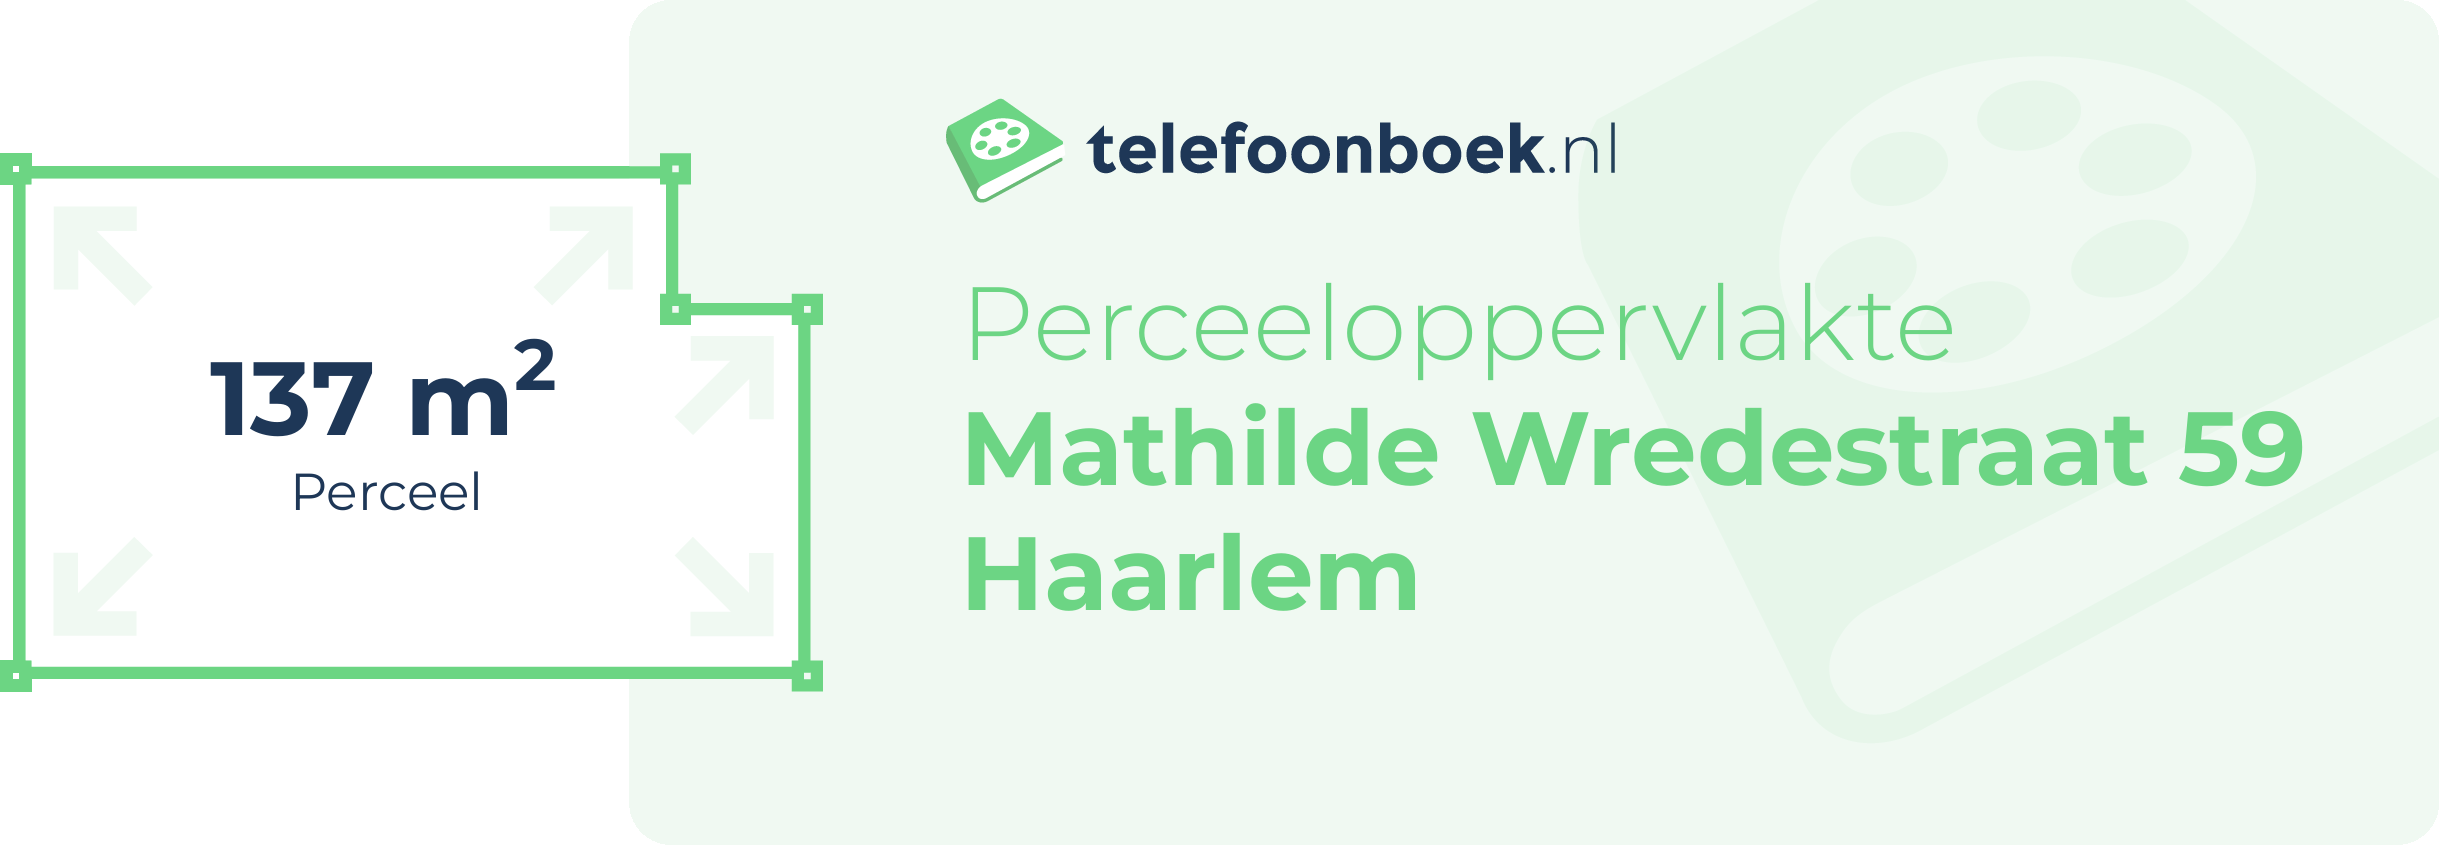 Perceeloppervlakte Mathilde Wredestraat 59 Haarlem